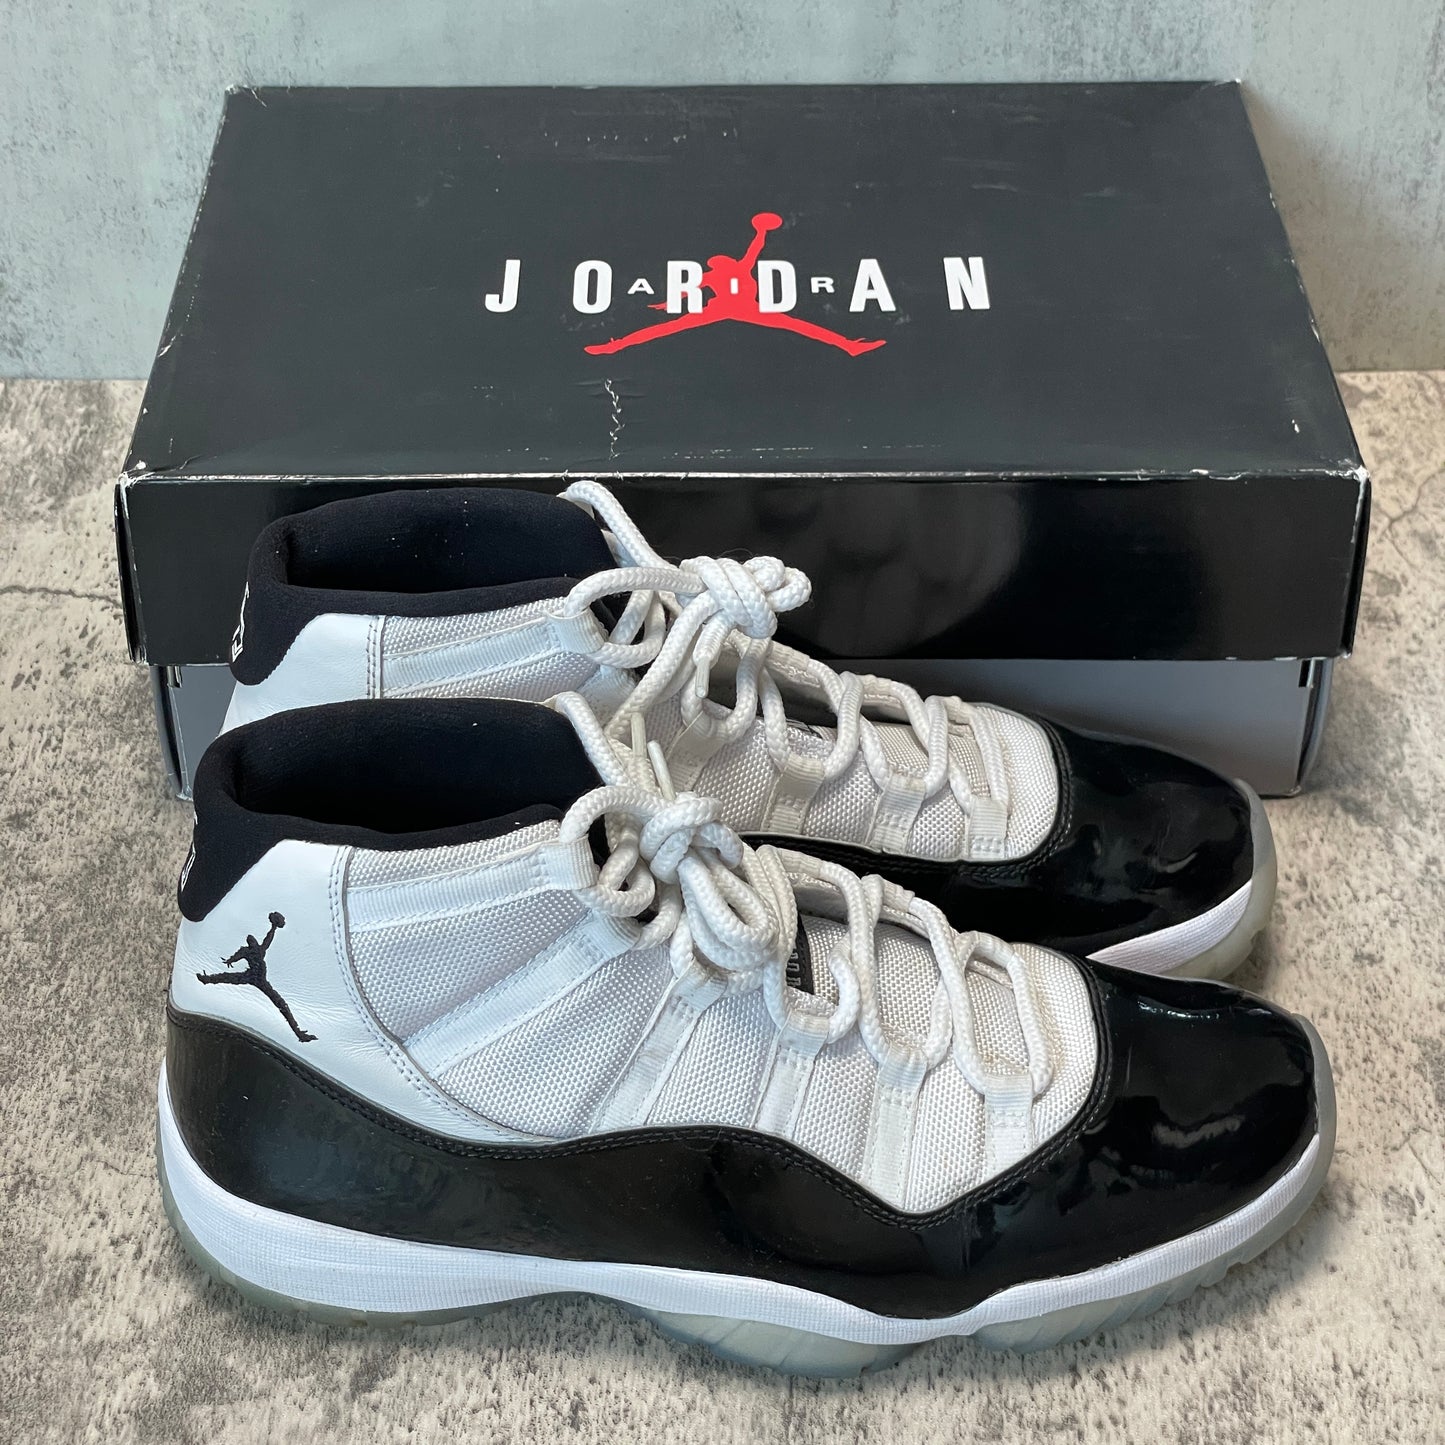 Jordan 11 Retro Concord (2018) Size 11